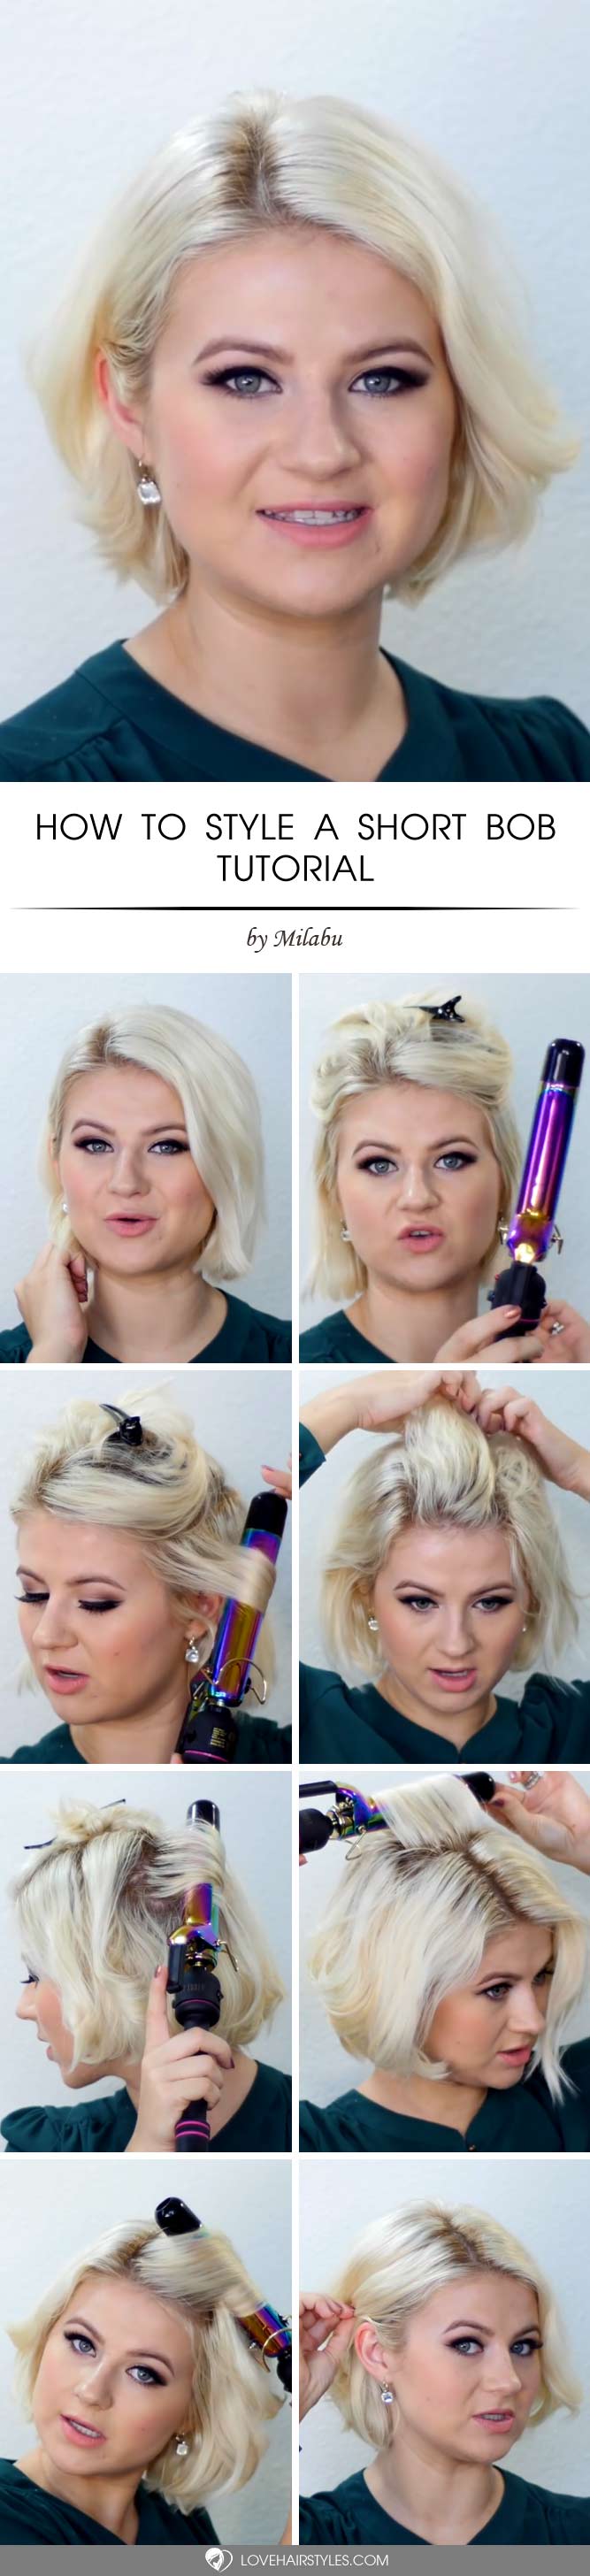 Como colocar um bob curto #shorthair #tutorial #hairstyles #bobharicut #blondehair